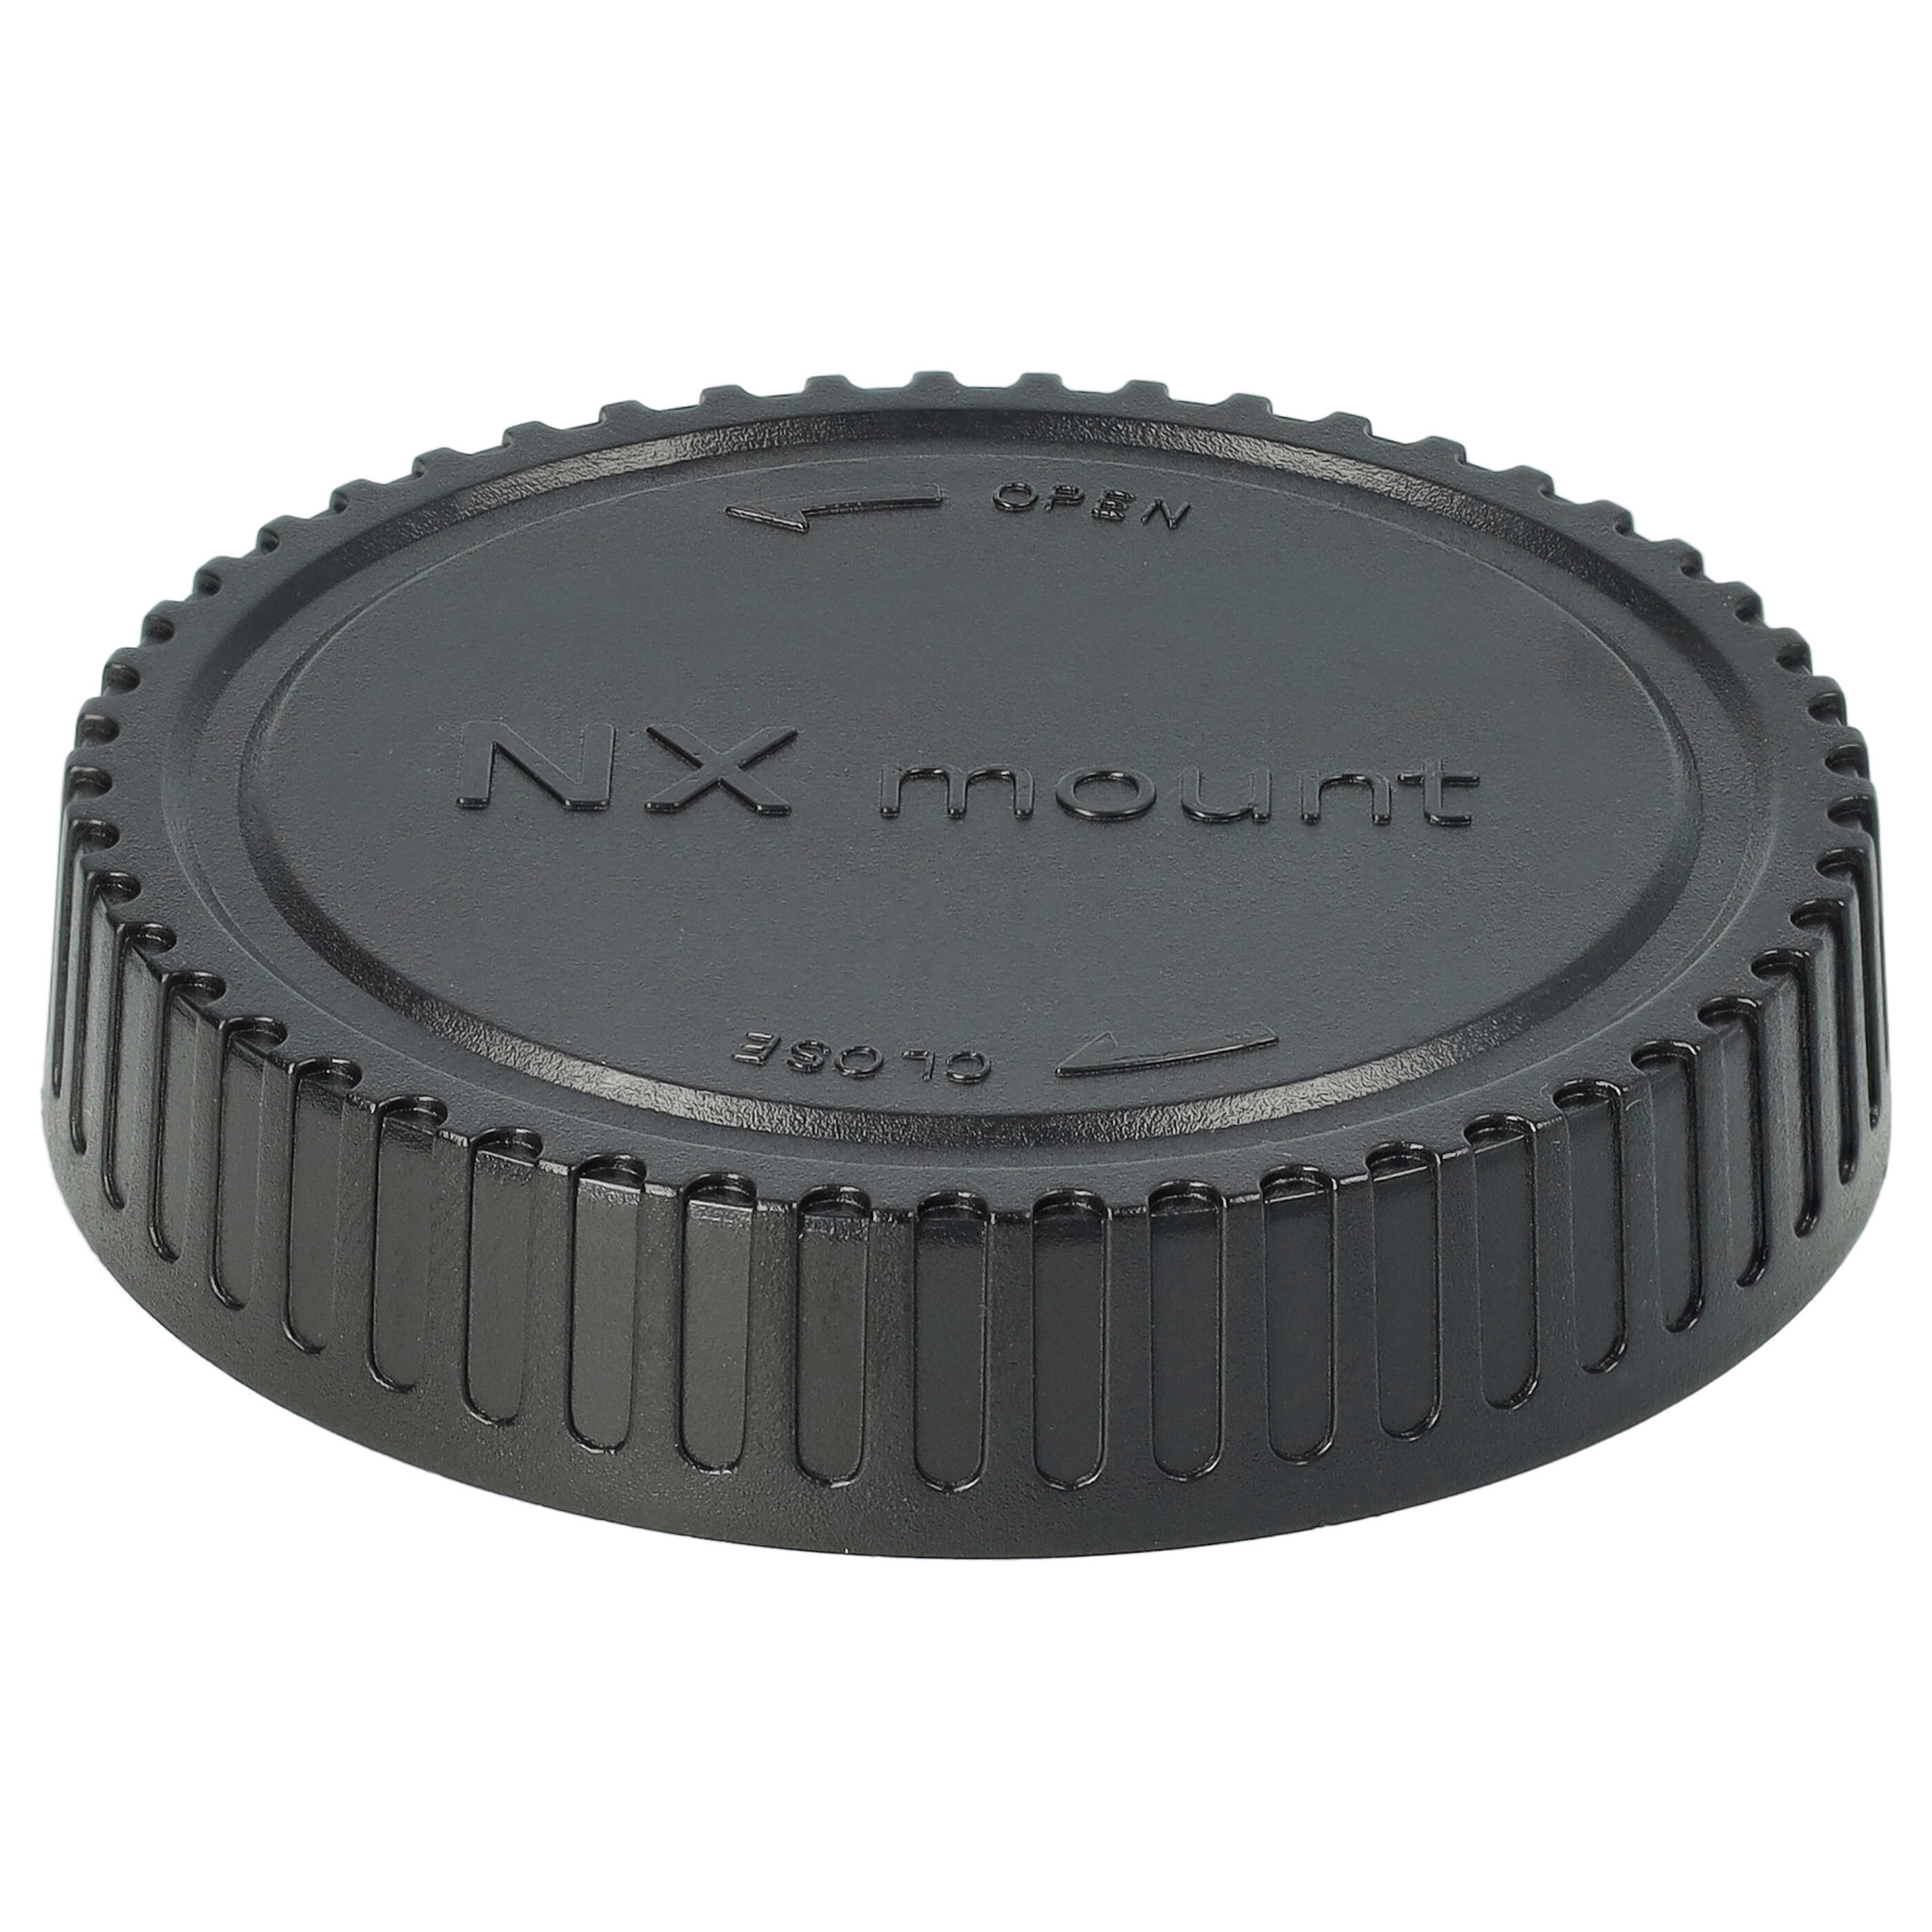  Objektiv-Rückdeckel für NX5 Samsung mit NX - Bajonett - Schwarz